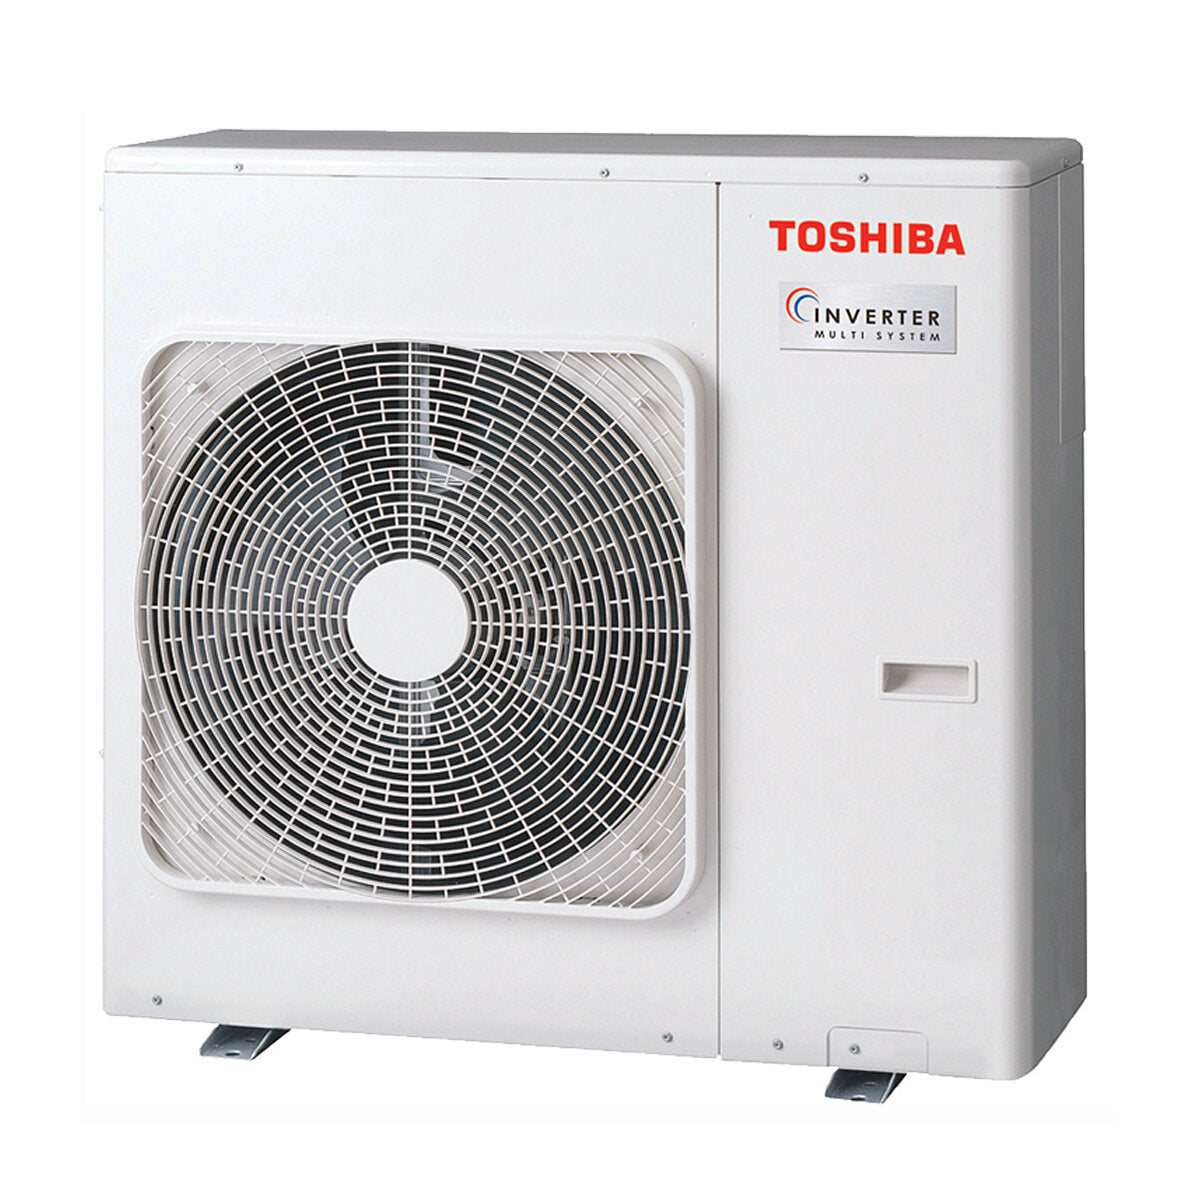 Toshiba Ductable U2 penta split air conditioner 7000 + 9000 + 9000 + 12000 + 12000 BTU inverter A ++ outdoor unit 10.0 kW